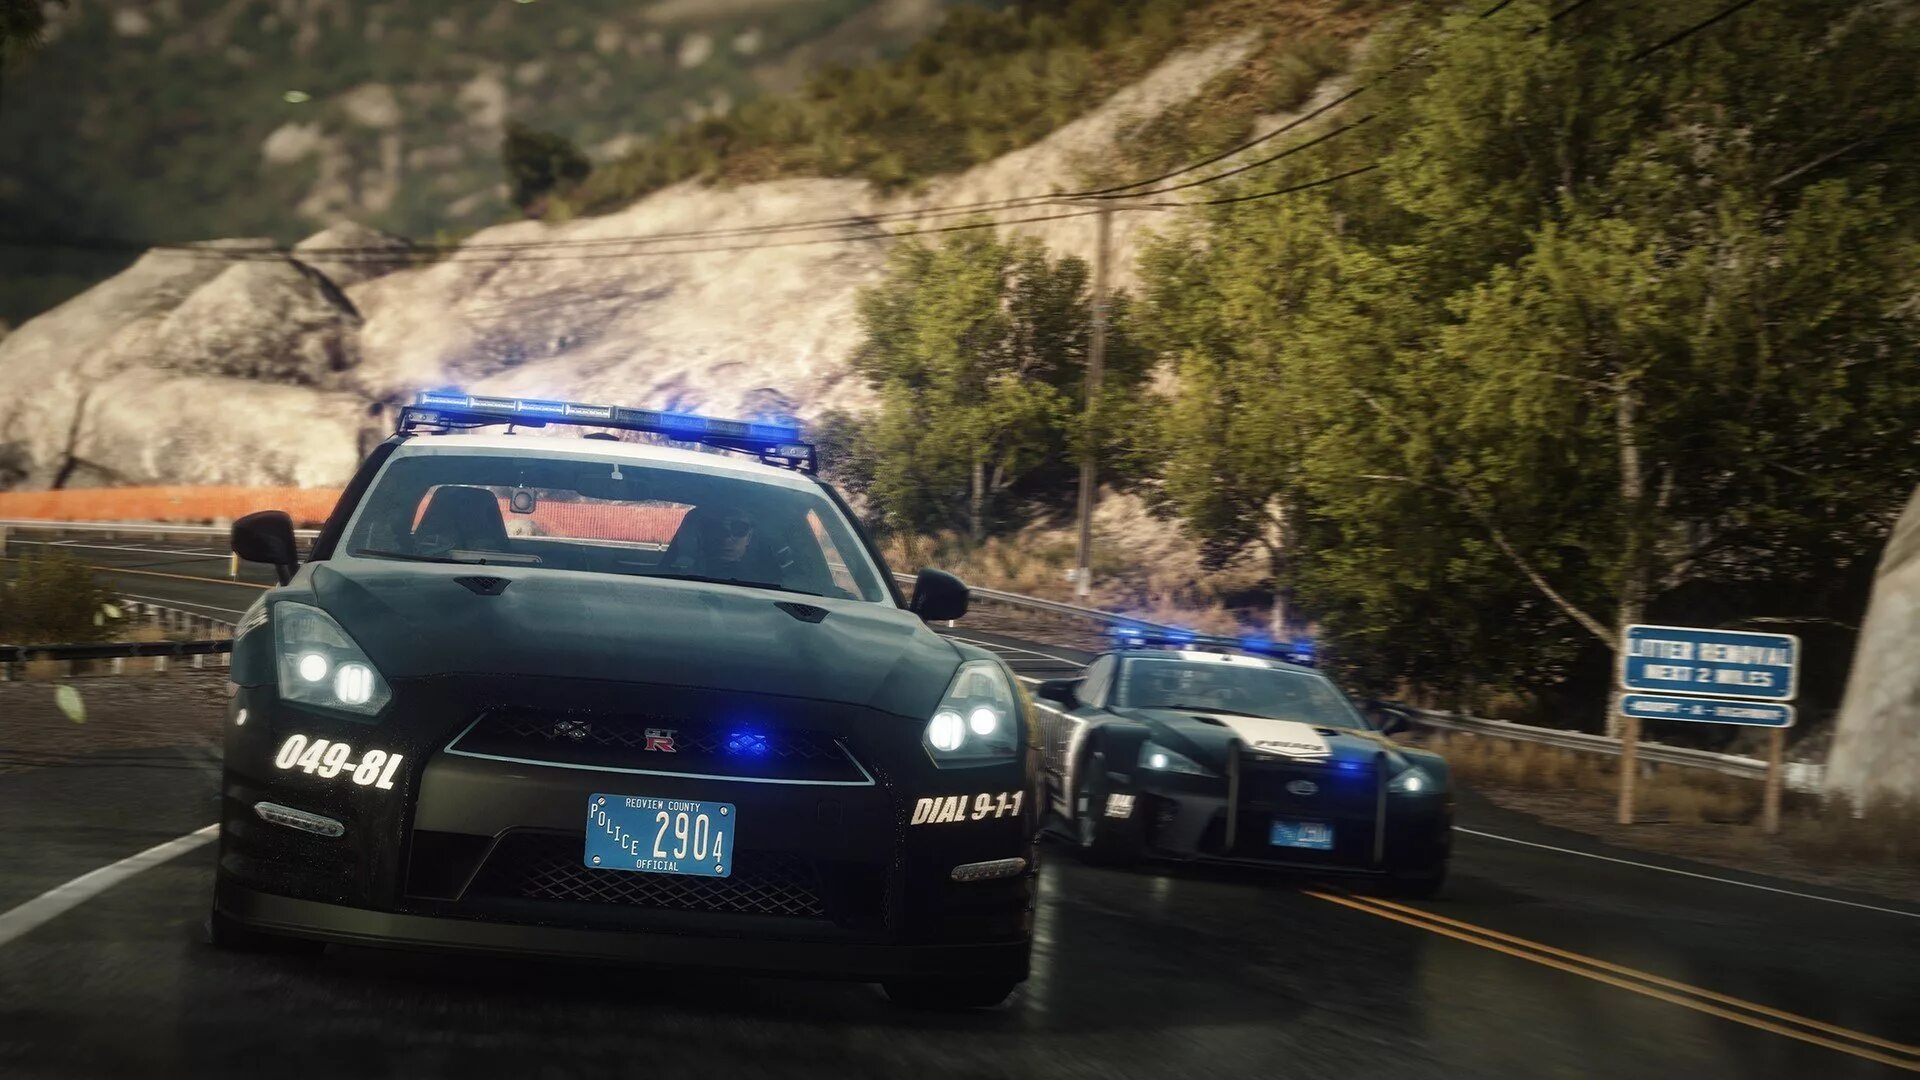 Спид кар. Need for Speed Rivals Xbox 360. Нфс райвалс 2016. Nissan GTR Police need for Speed. NFS Rivals Nissan GTR.